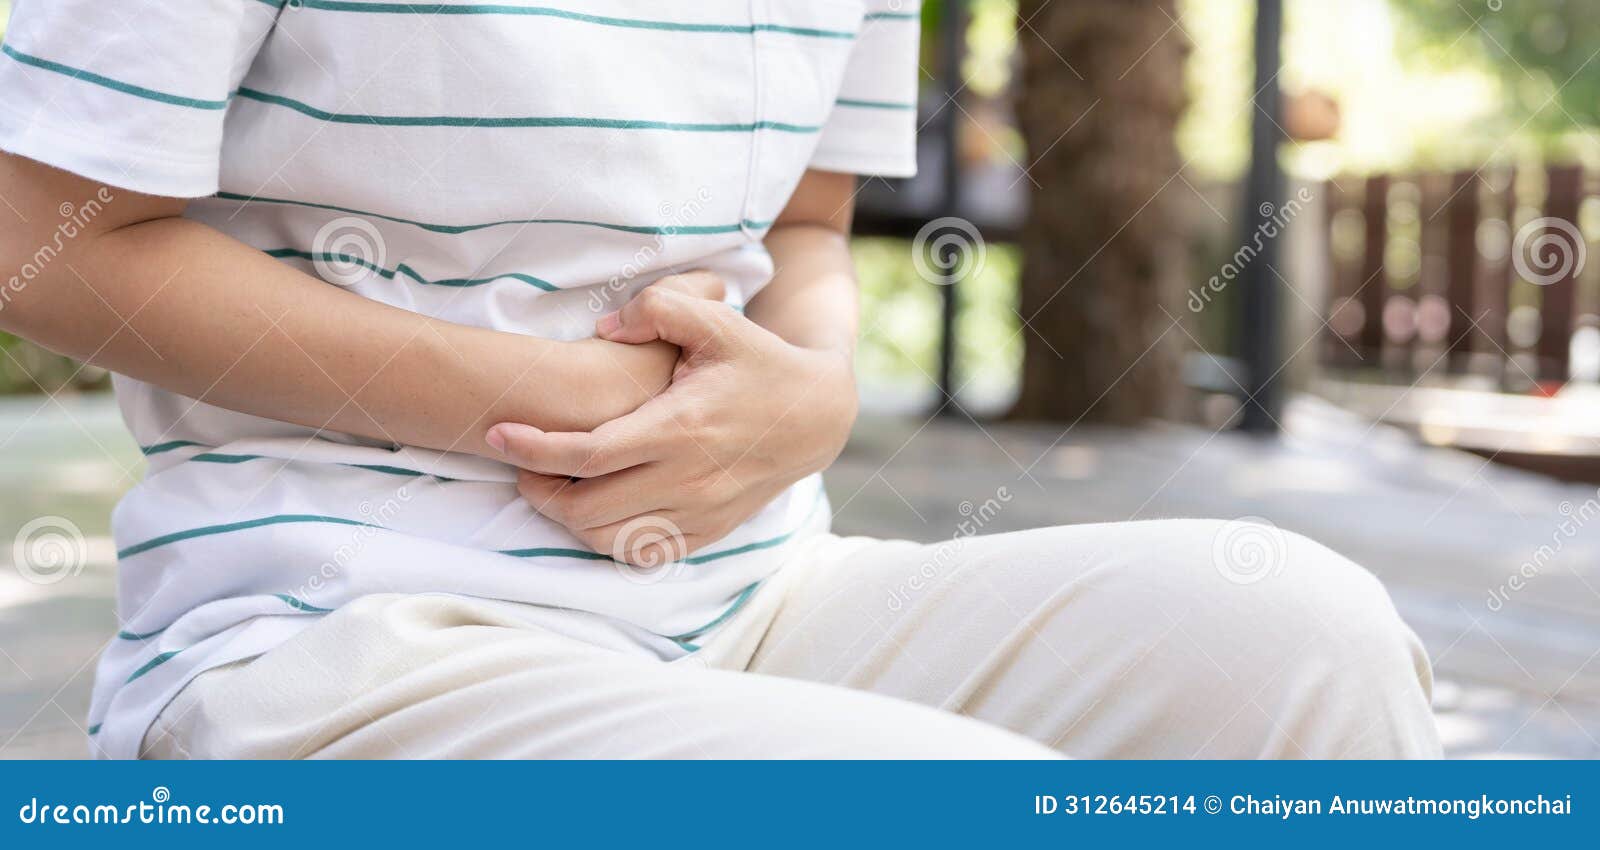 stomach ache. asian women have abdominal pain, indigestion, gastritis, menstrual cramps, flatulence, diarrhea, distention, colon